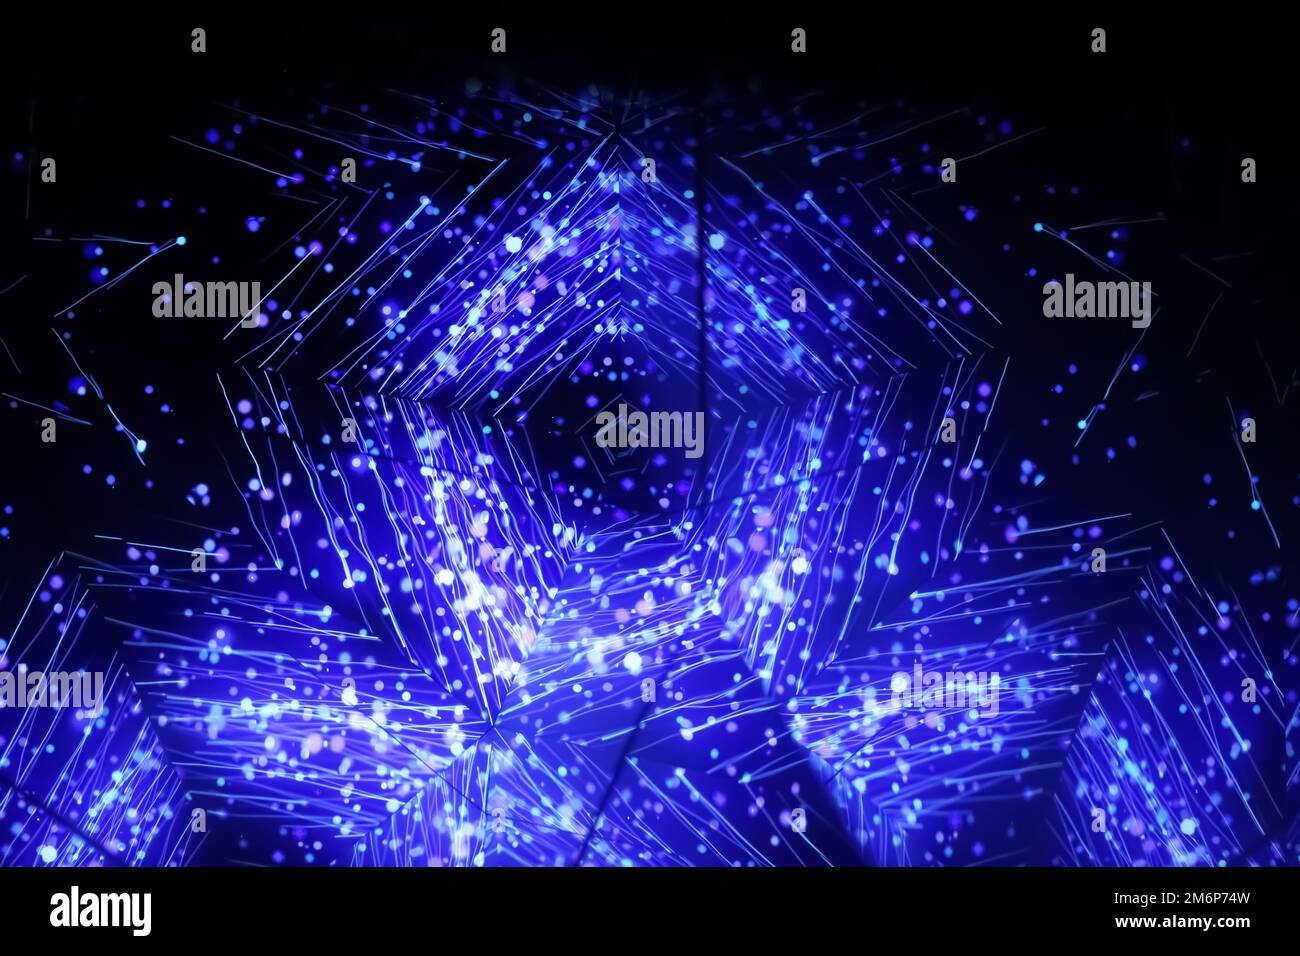 Blaues Kaleidoskop-Ornament. Karussell-Kaleidoskop. Helles Neonmuster auf dunklem Hintergrund. Horizontales unscharfes Bild Stockfoto